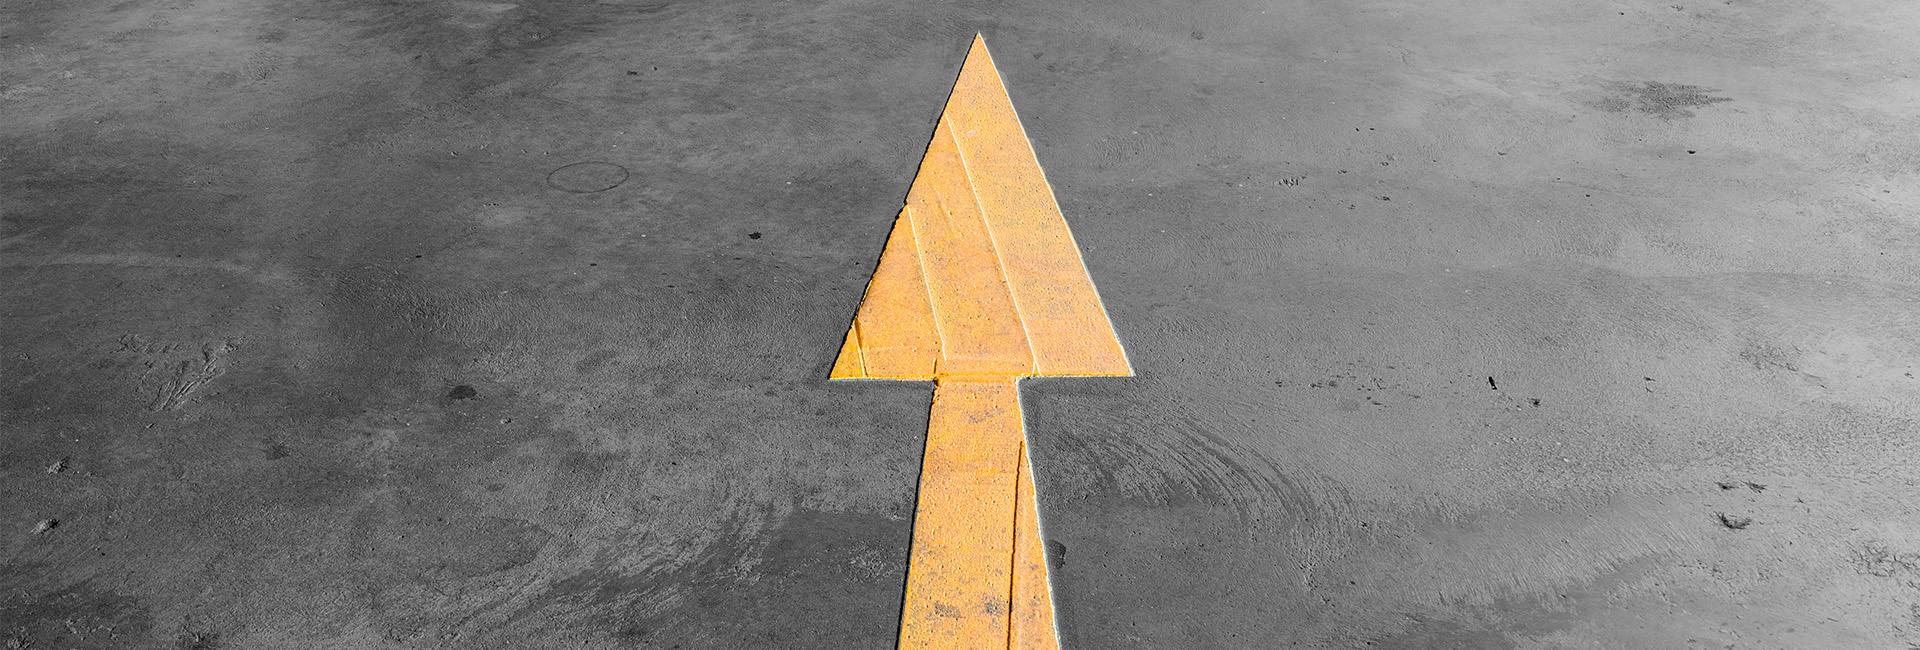 yellow arrow painted onto a dark grey road